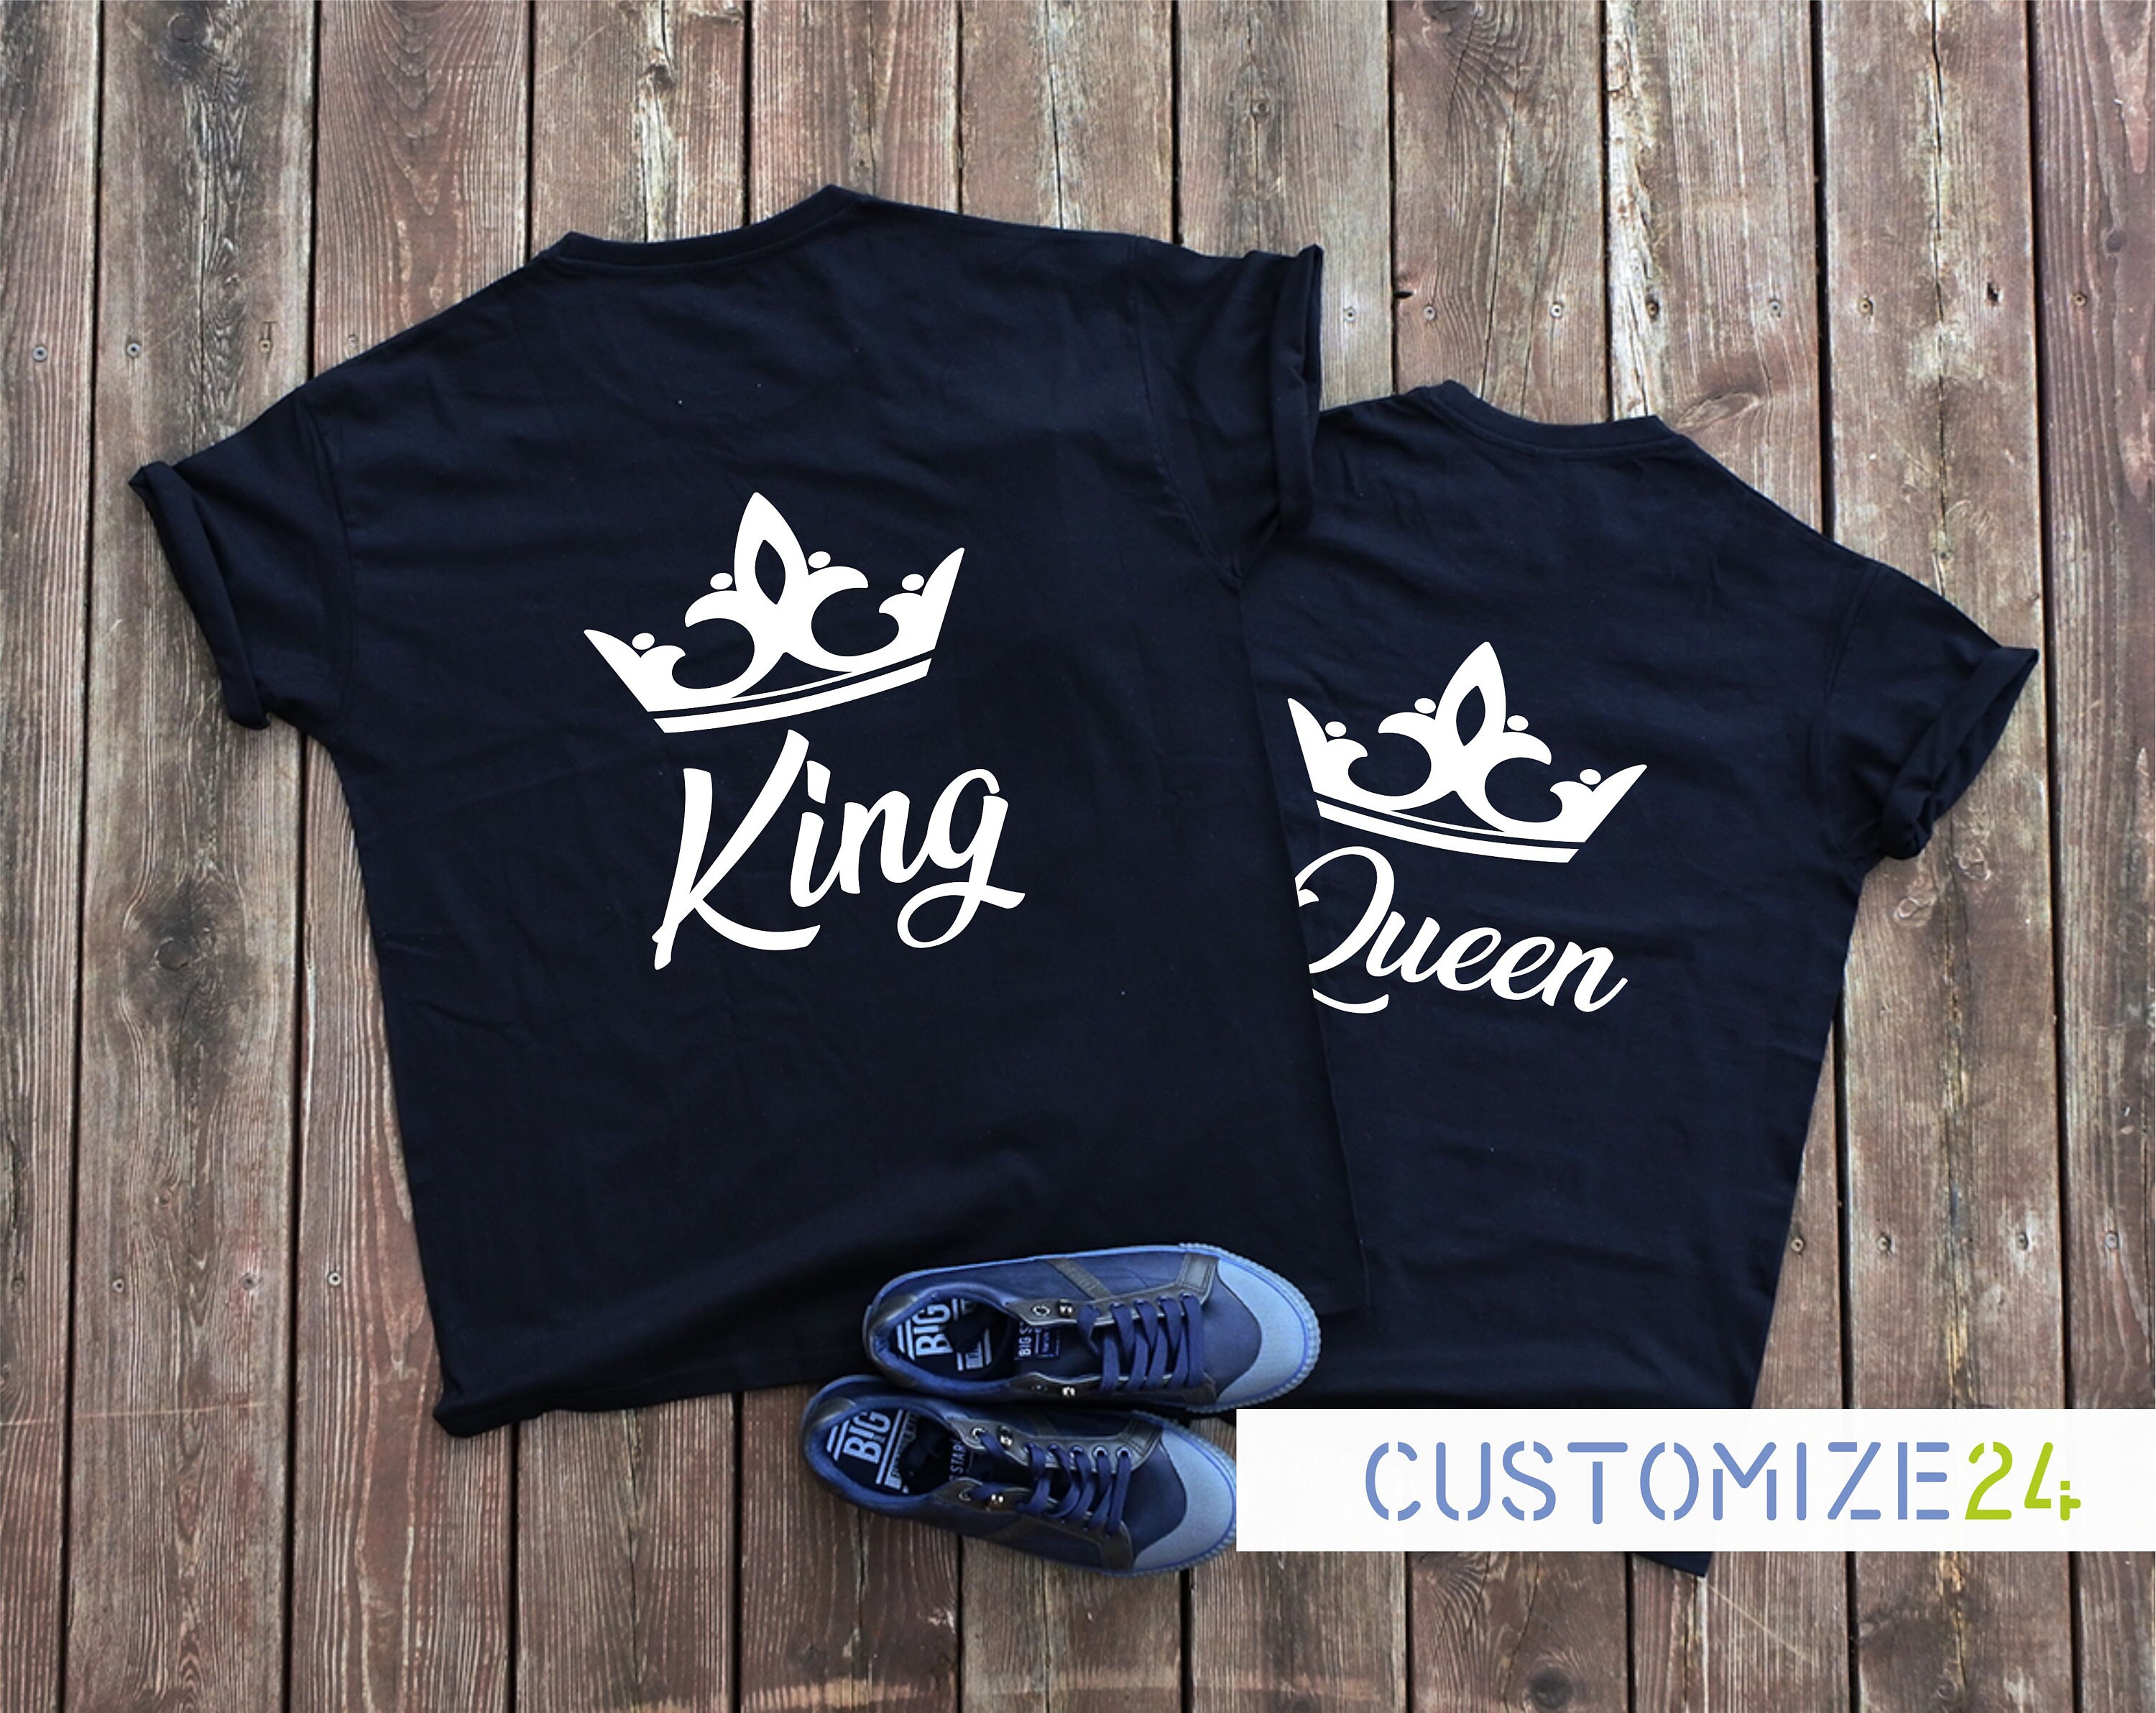 King and Queen T-Shirt King T-Shirt Queen T-Shit Crown King Queen Matching T-Shirt Couple T-Shirt Couple Shirt Gift for Him Gift for Her